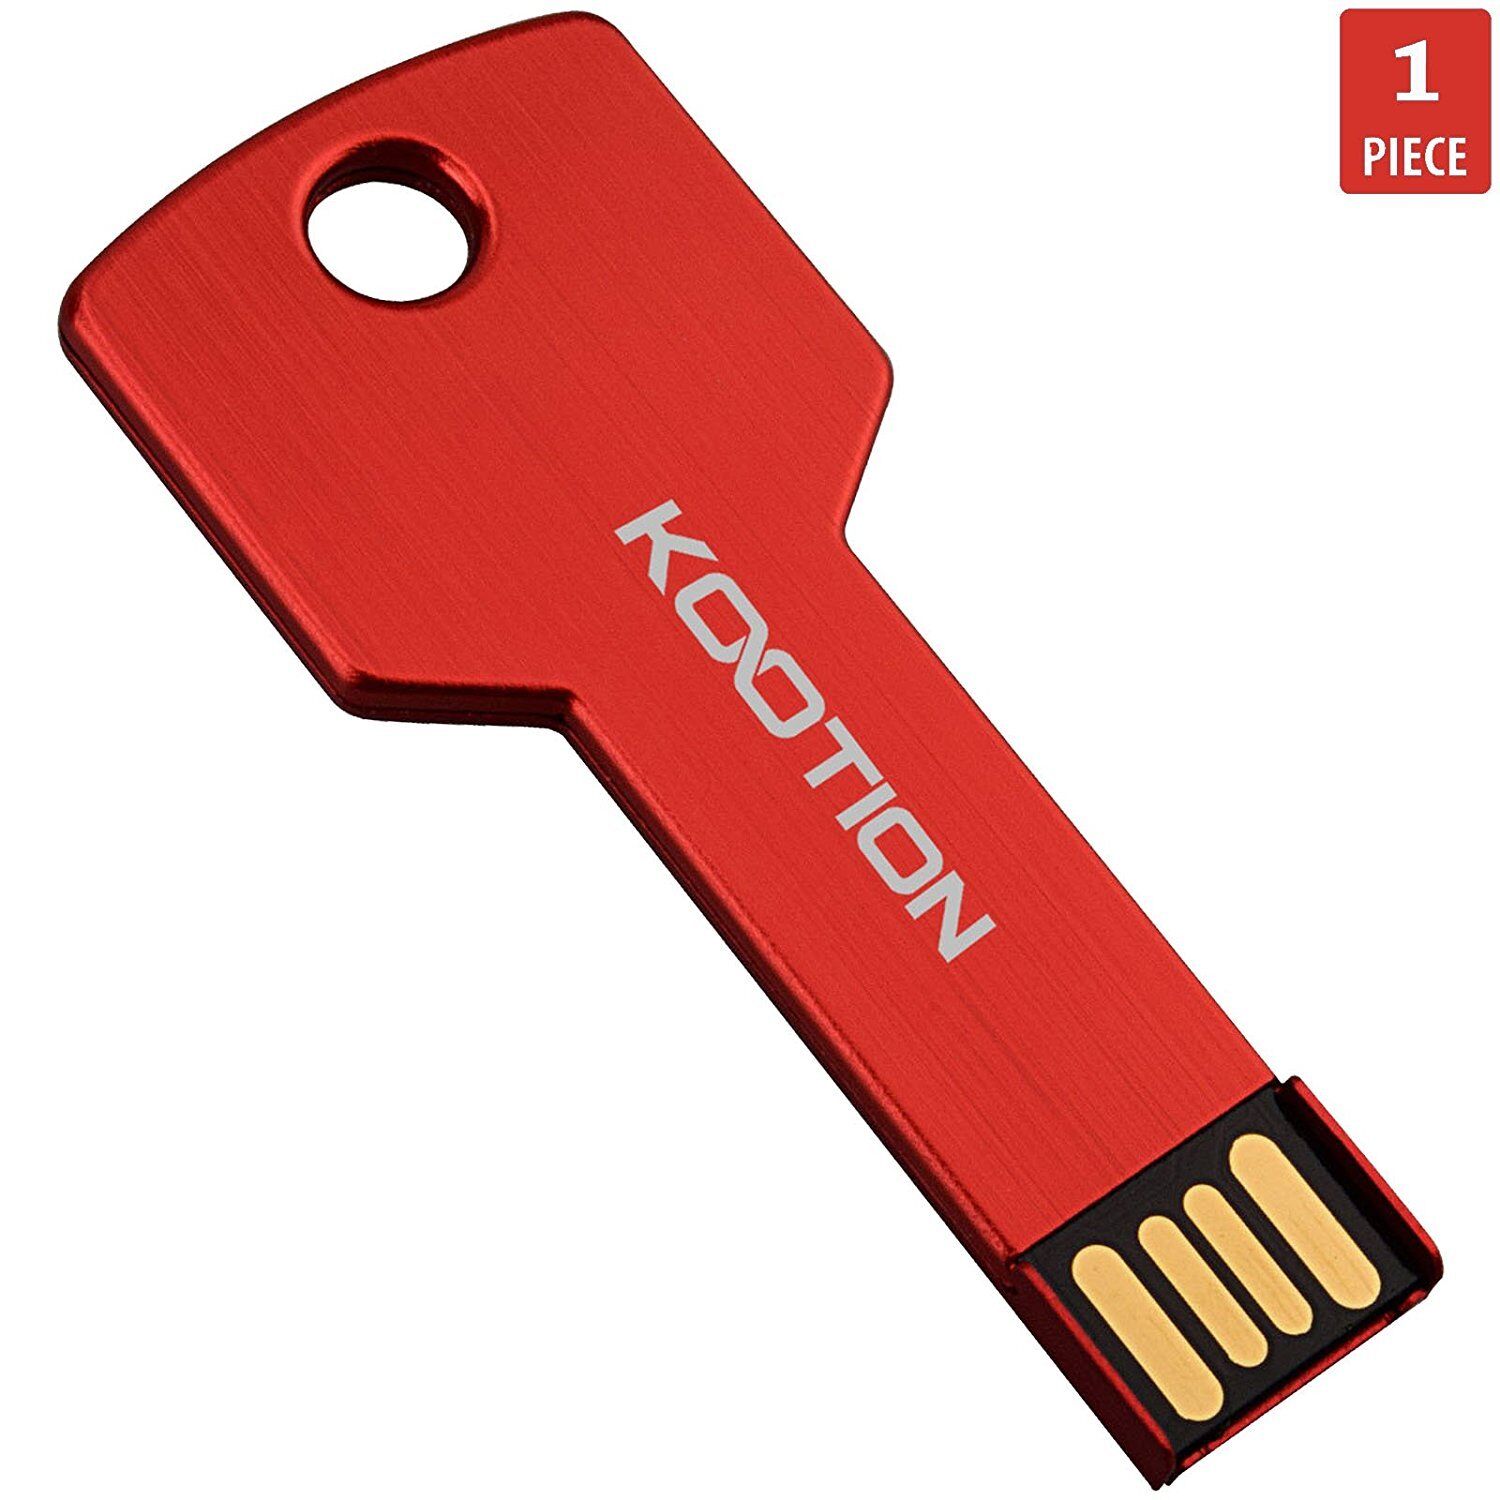 32GB Metal Key Shape USB Flash Drive Memory Stick Thumb Pen Drive Storage Red